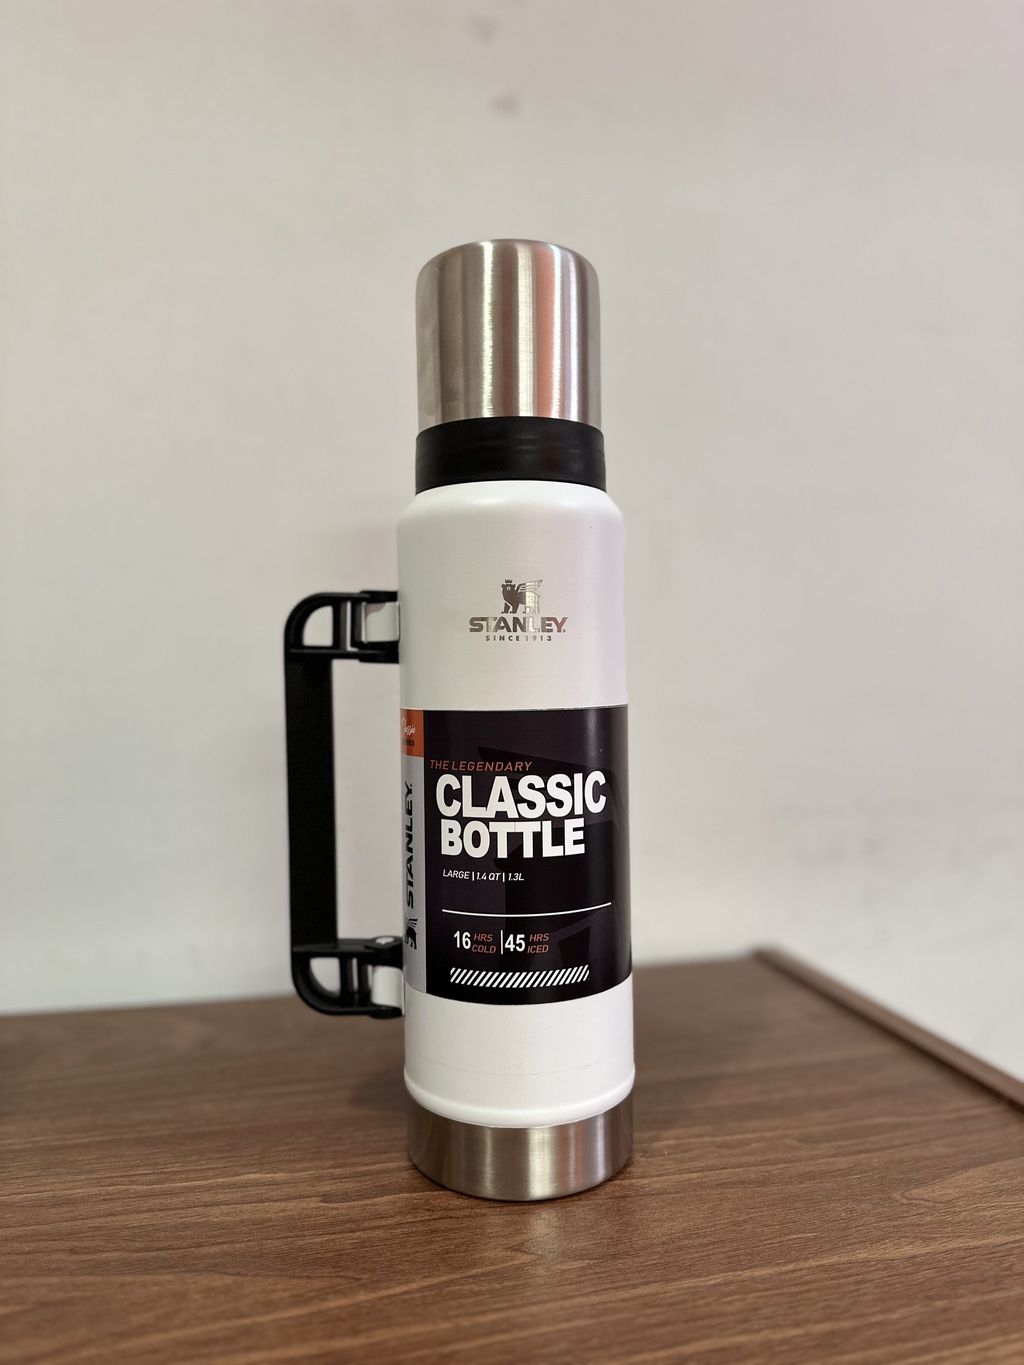 Termo Stanley Classic Blanco 1.3 litros